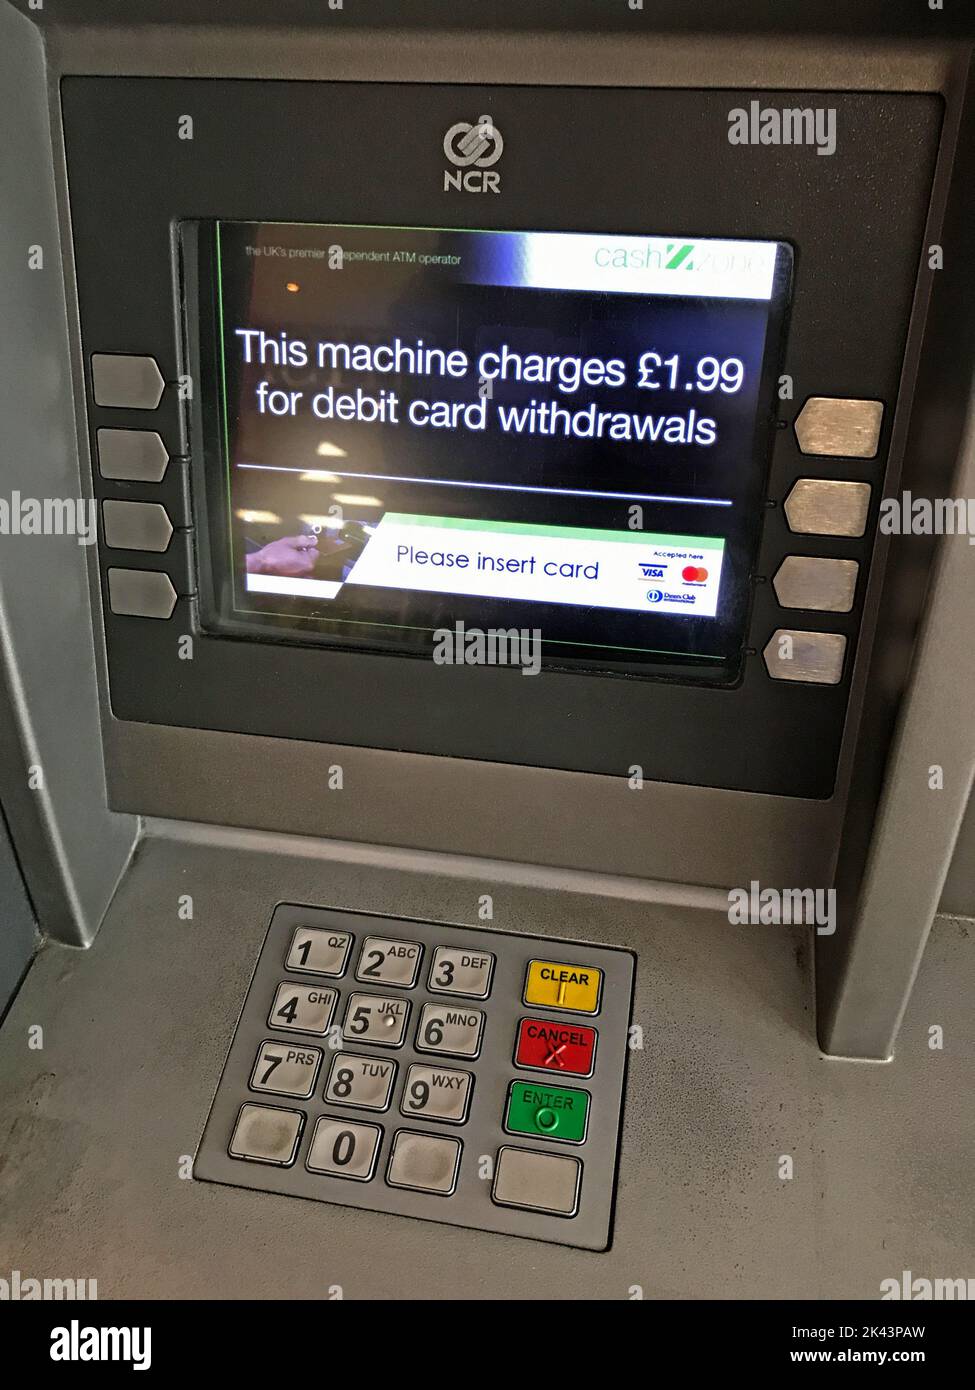 Bankautomat für Abhebungen per Debitkarte, England, UK, bitte Karte einlegen. Teurer Zugang zu Bargeld Stockfoto